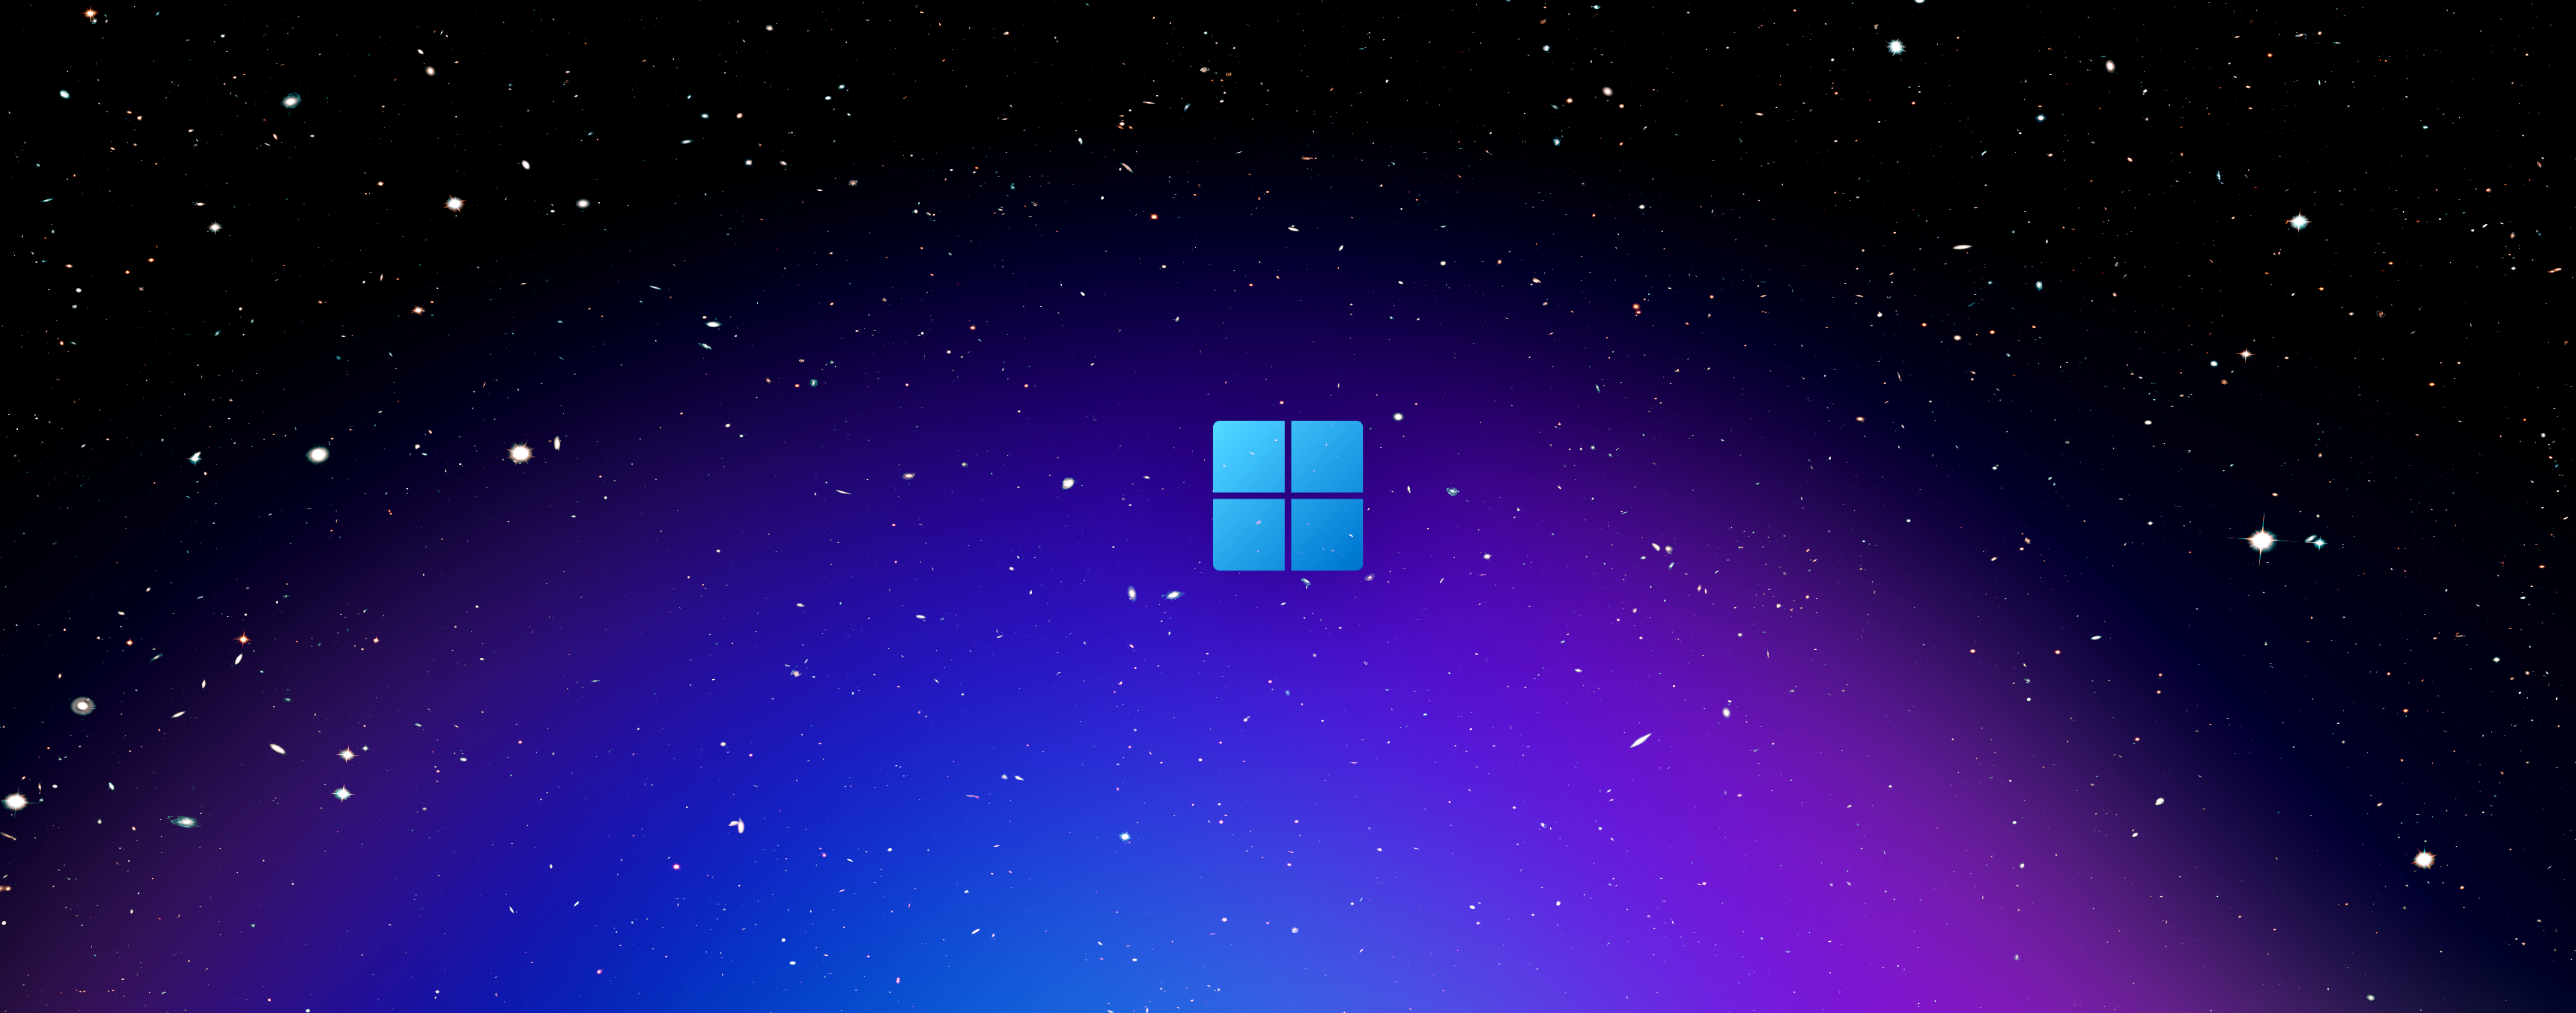 Logo Microsoft Space Simple Background Minimalism Stars 3440x1353